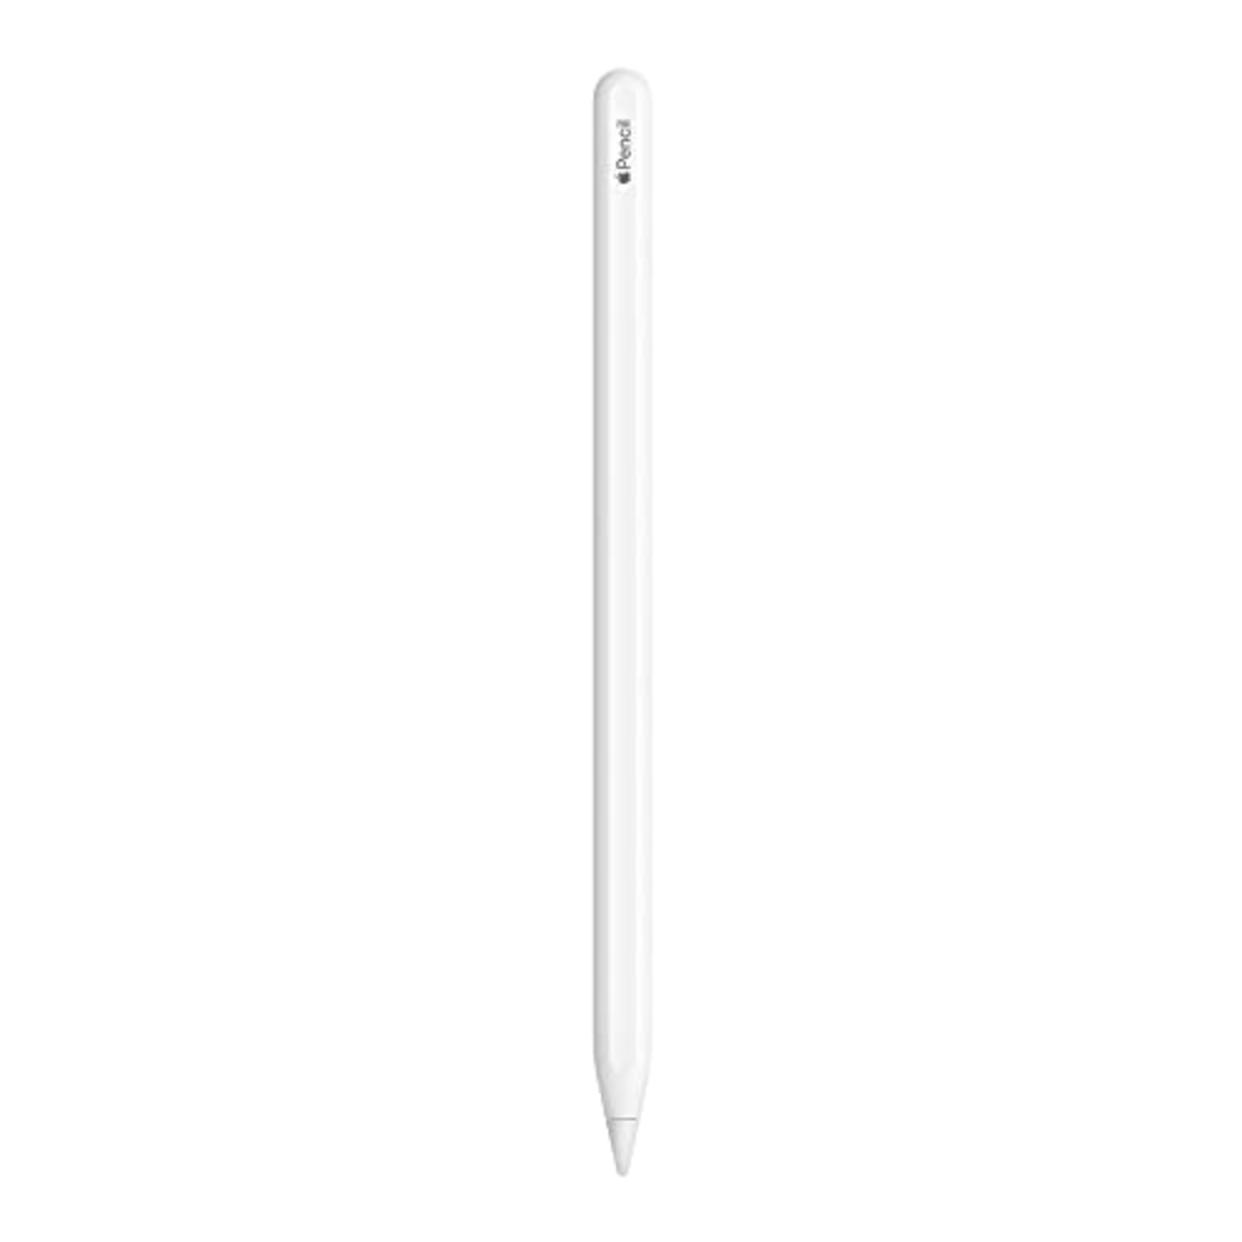 Apple Pencil (2nd Generation) (Amazon / Amazon)